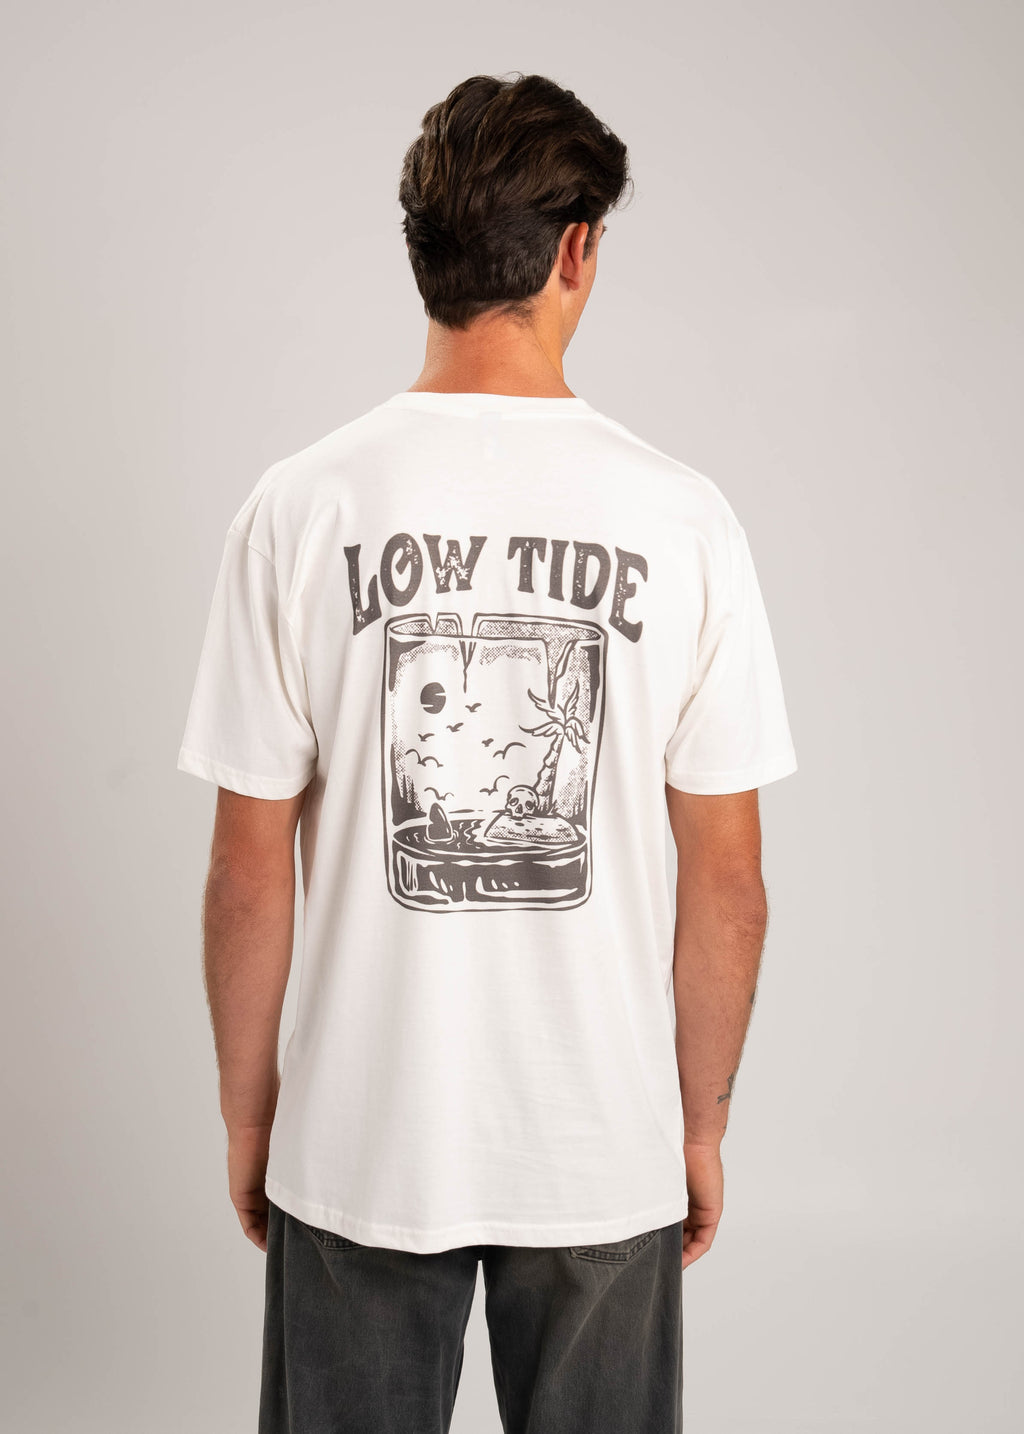 Dr.Moose Byron Bay Low Tide T-Shirt